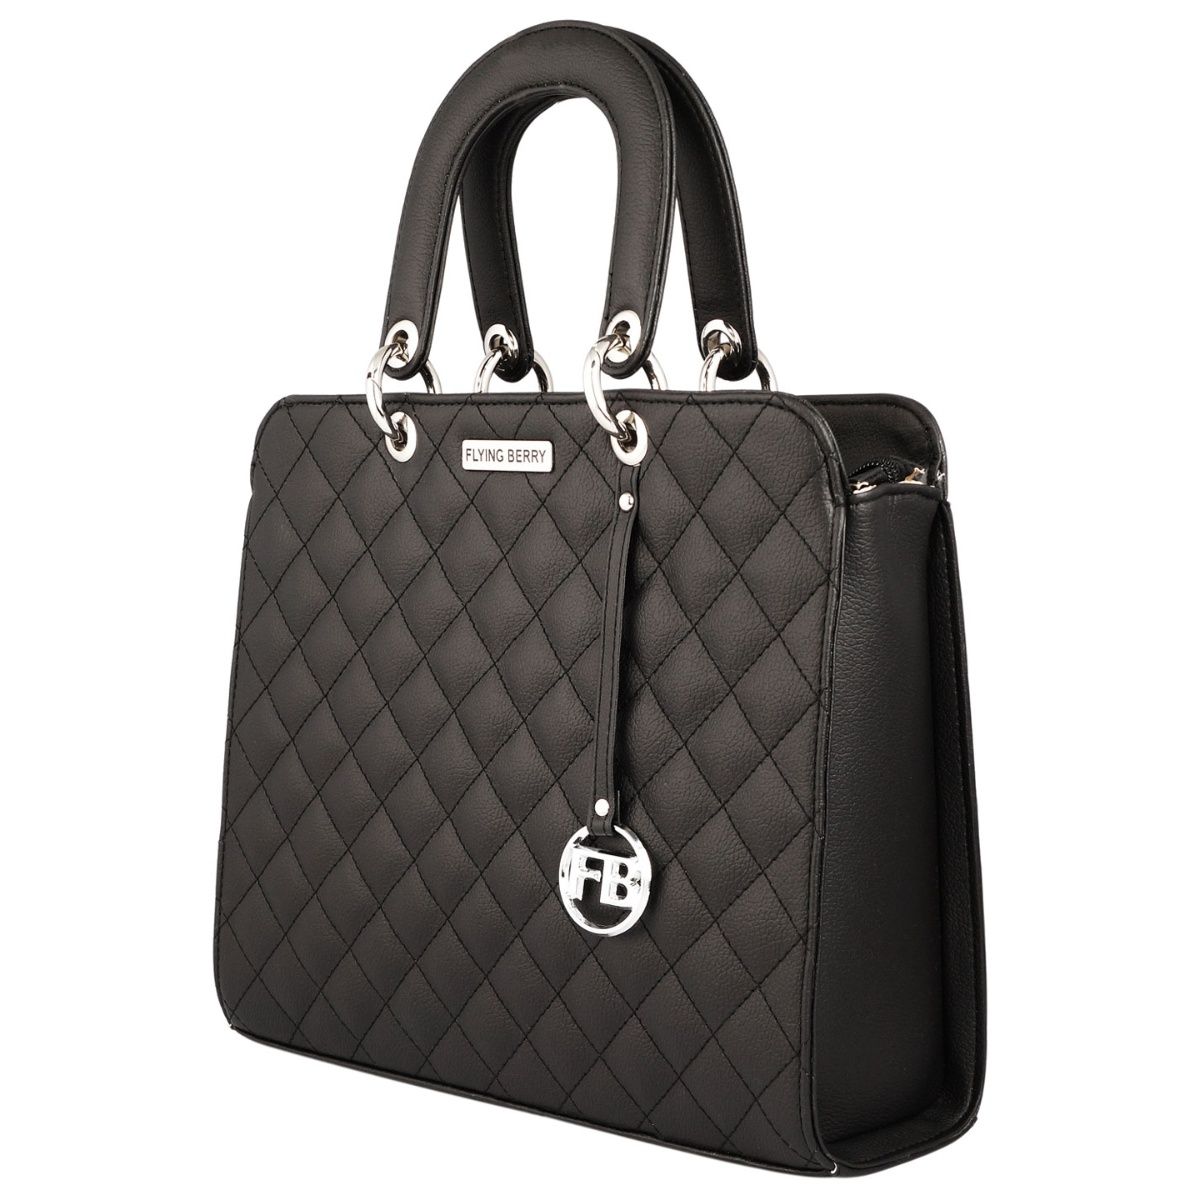 Ladies Purses And Handbags | Ladies purse handbag, College handbags, Women  handbags